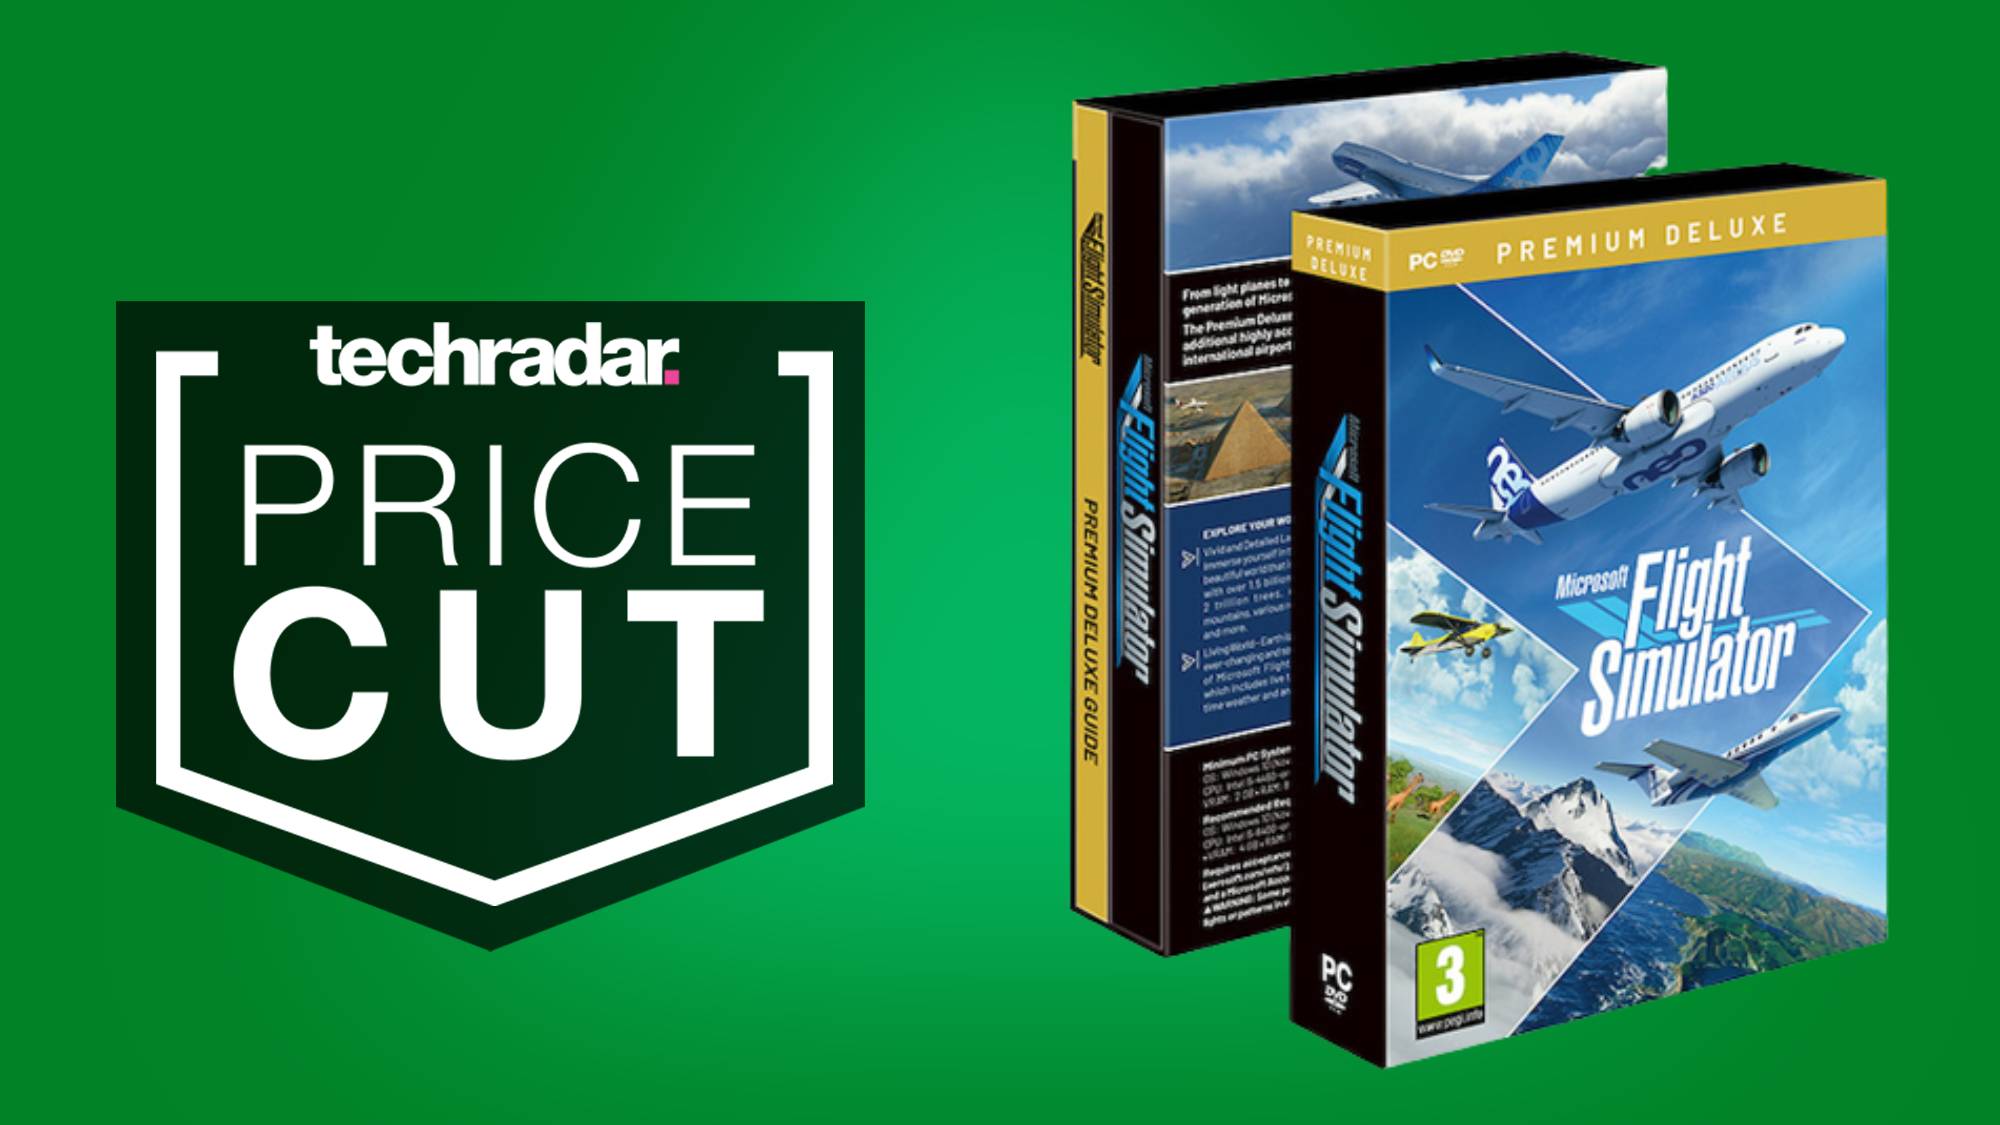 Buy Microsoft Flight Simulator 2024 Xbox One Compare Prices